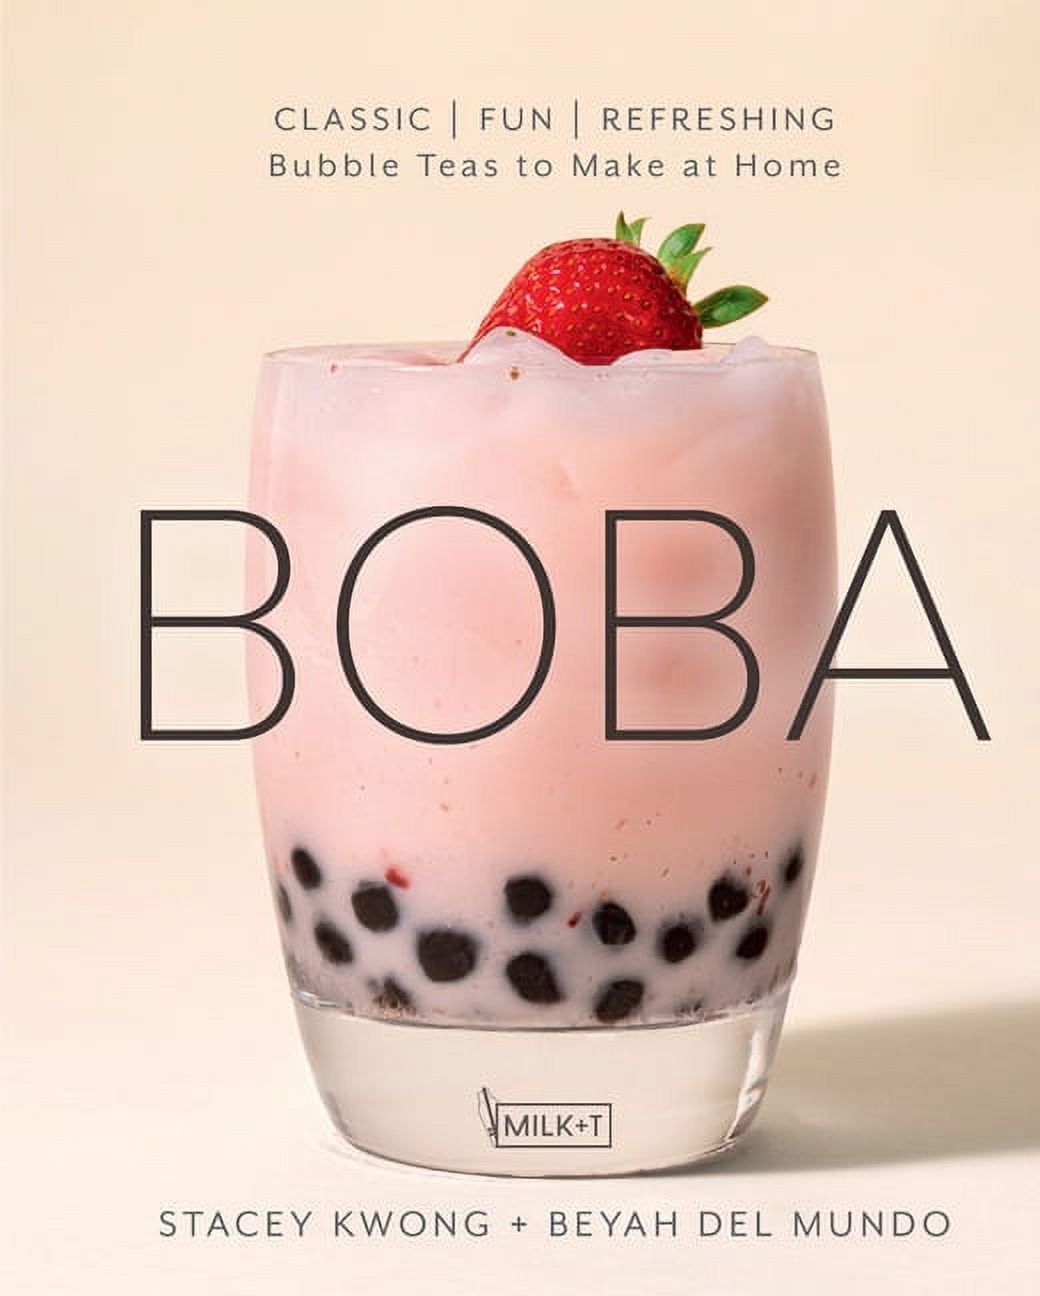 Bubble Tea Buddy Poster for Sale by joseanaya